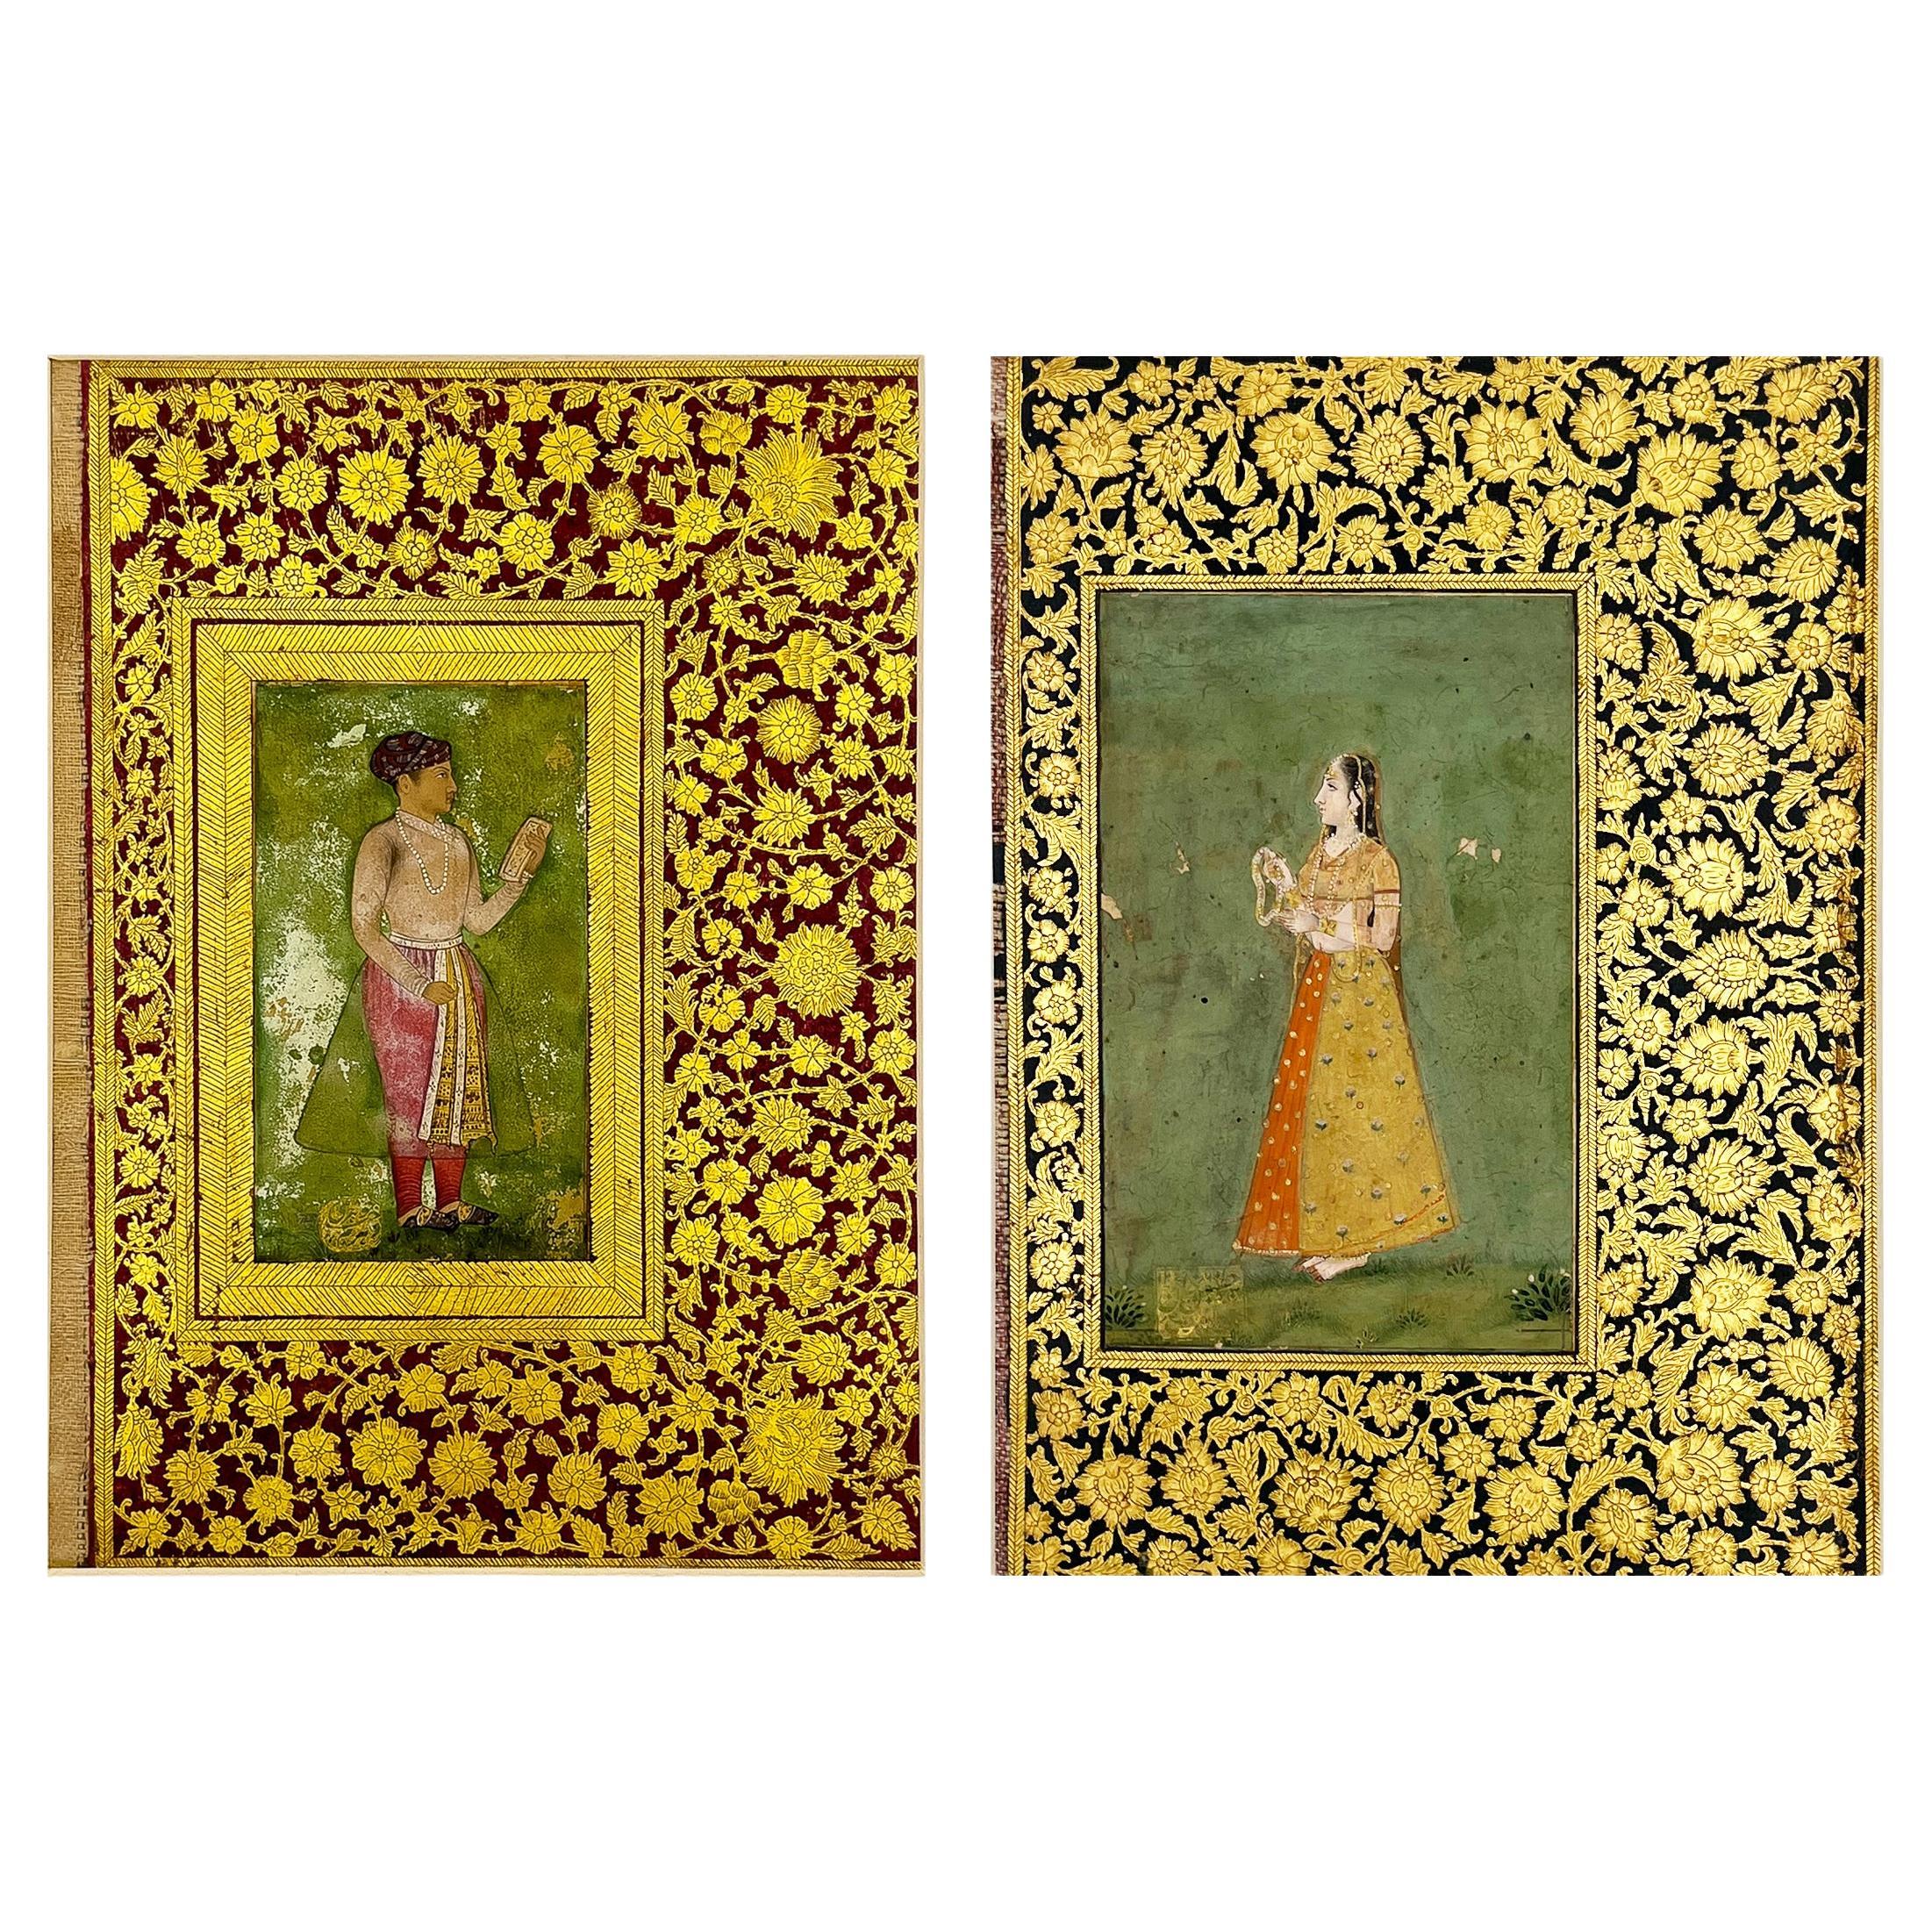 Pair of Red, Black and Gold Indian Album Pages, Deccan, Bijapur or Golconda, C